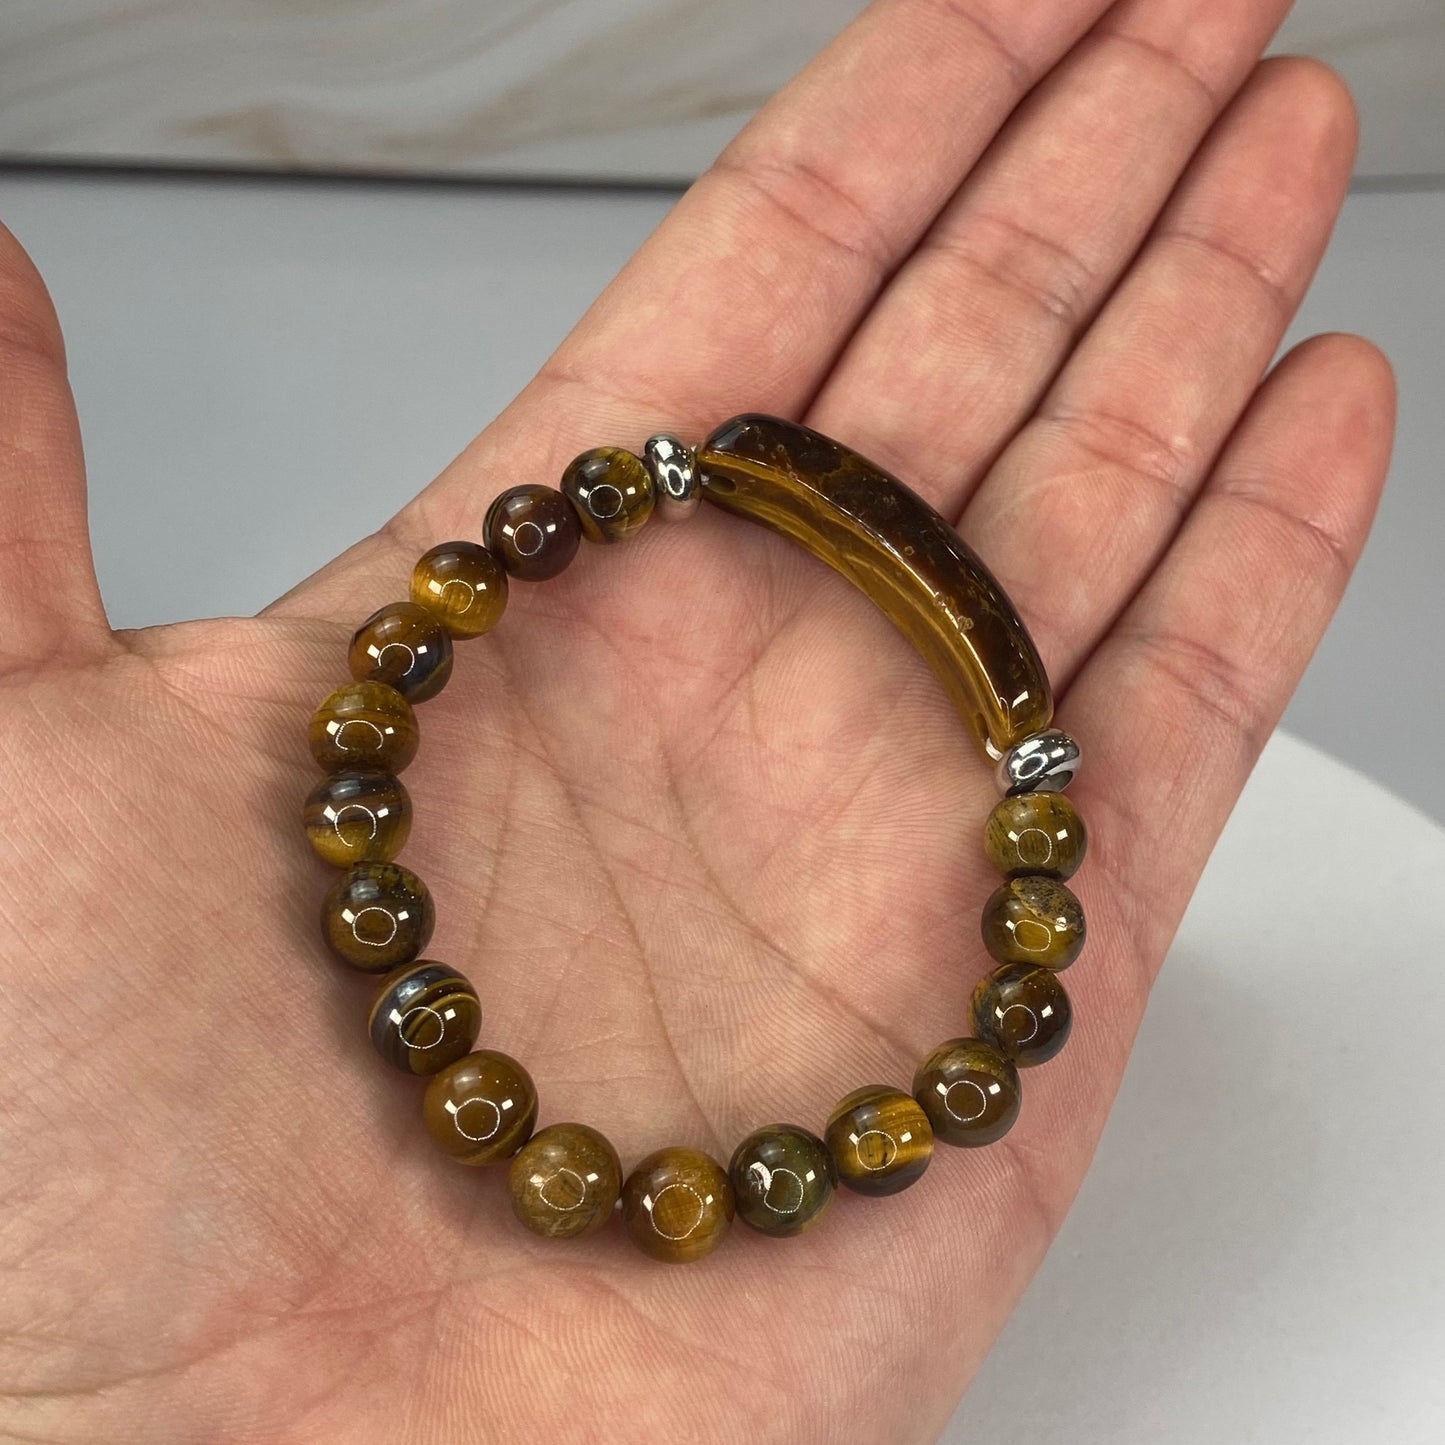 Beads Bracelets (Tiger Eyes) (8 mm)